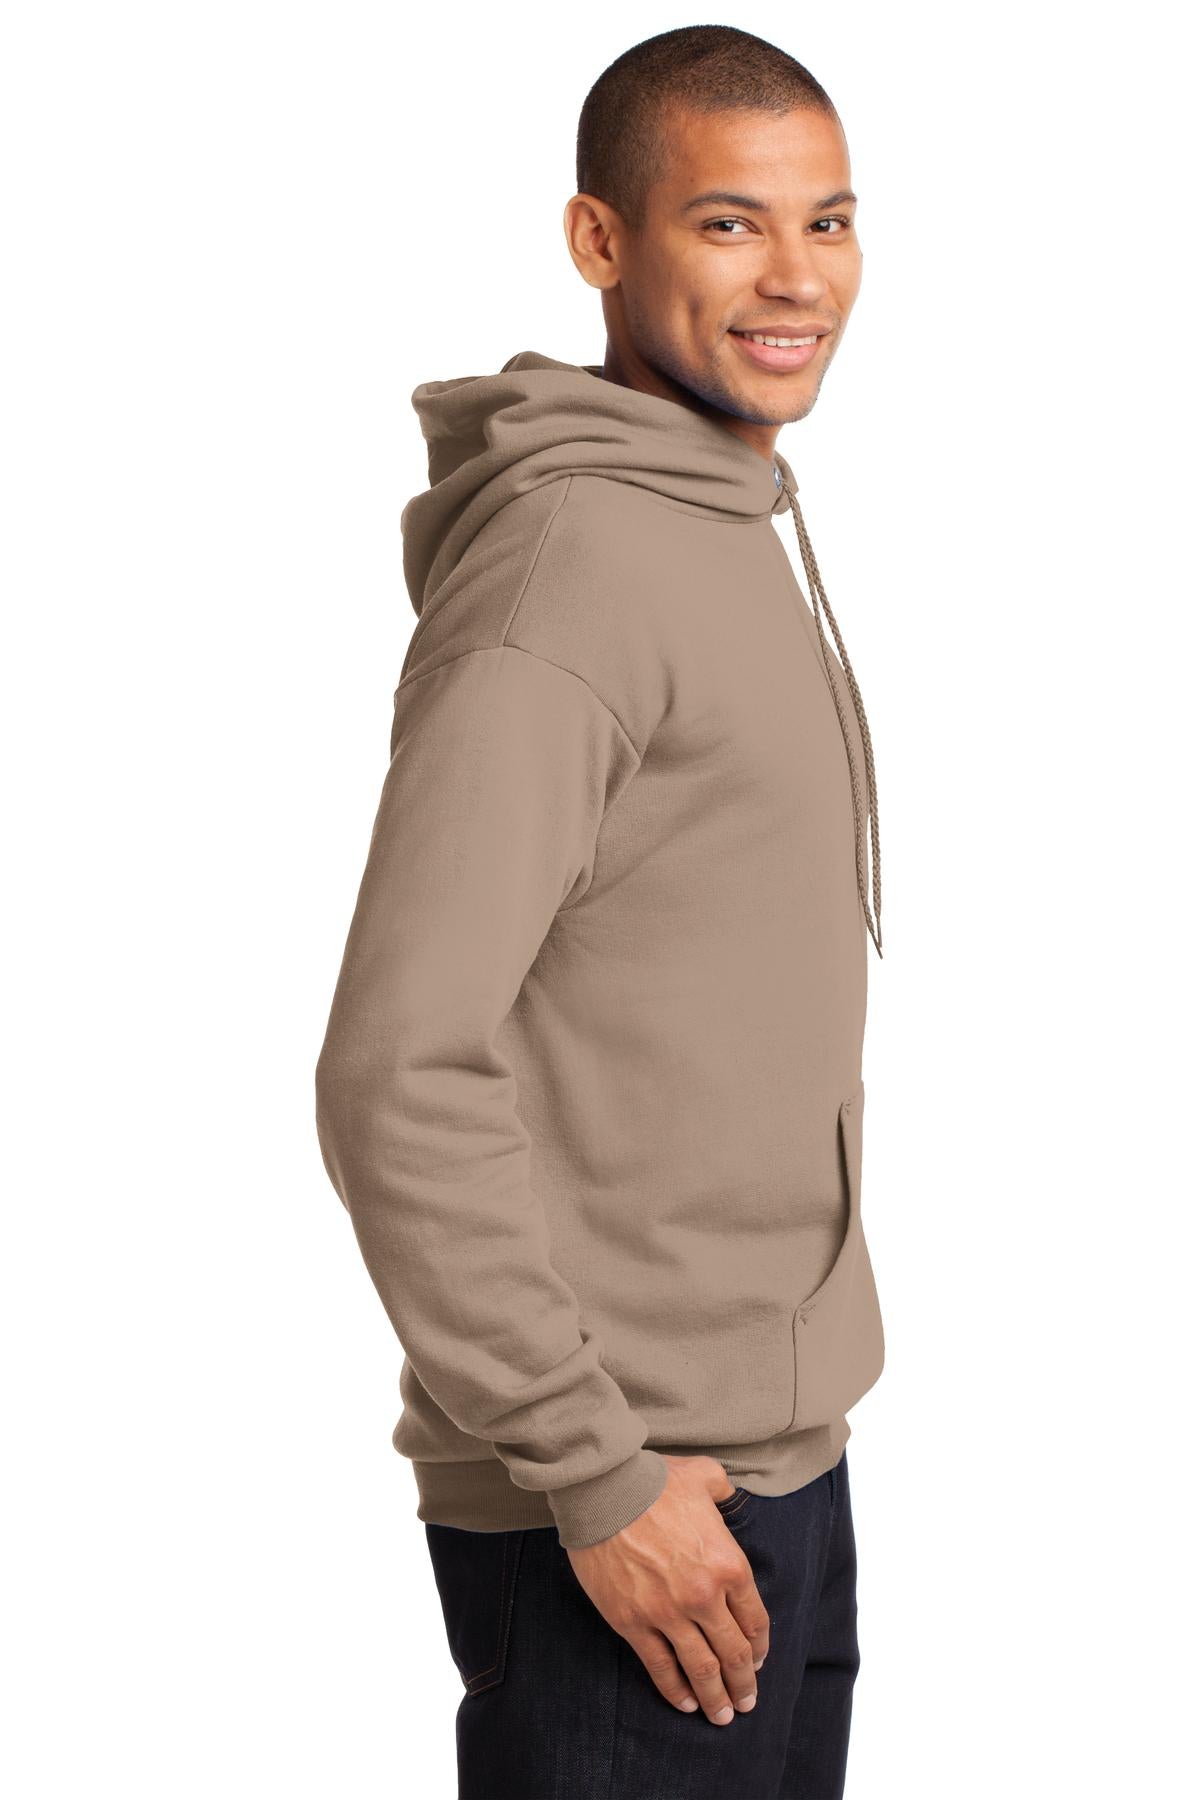 Port & Company® - Core Fleece Pullover Hooded Sweatshirt. PC78H [Sand] - DFW Impression